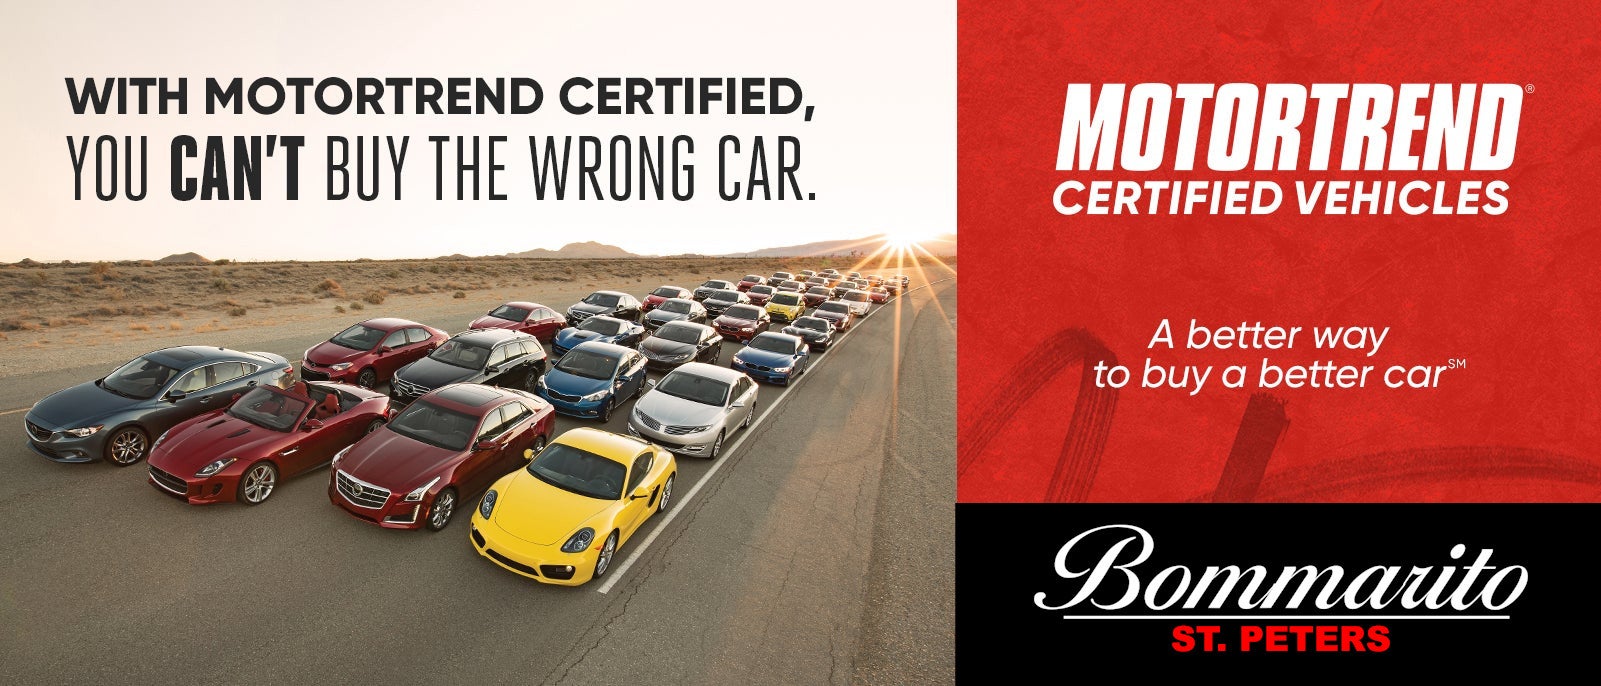 MotorTrend Certified Vehicles banner